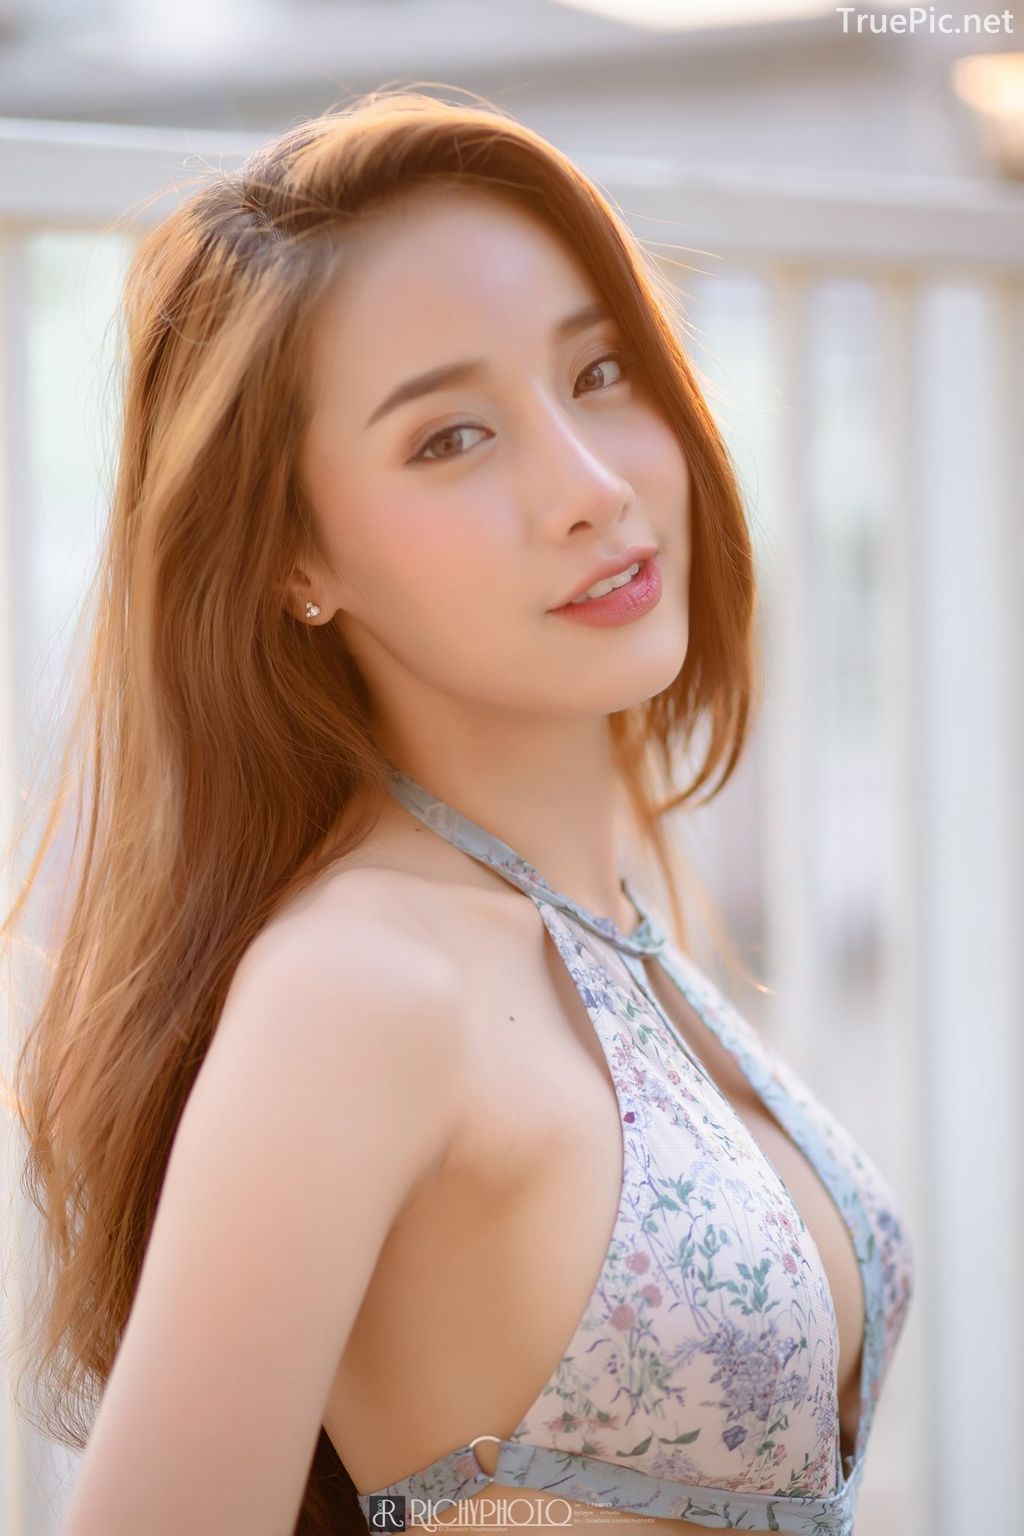 Image-Thailand-Sexy-Model-Pichana-Yoosuk-Album-Remember-The-Sea-TruePic.net- Picture-14